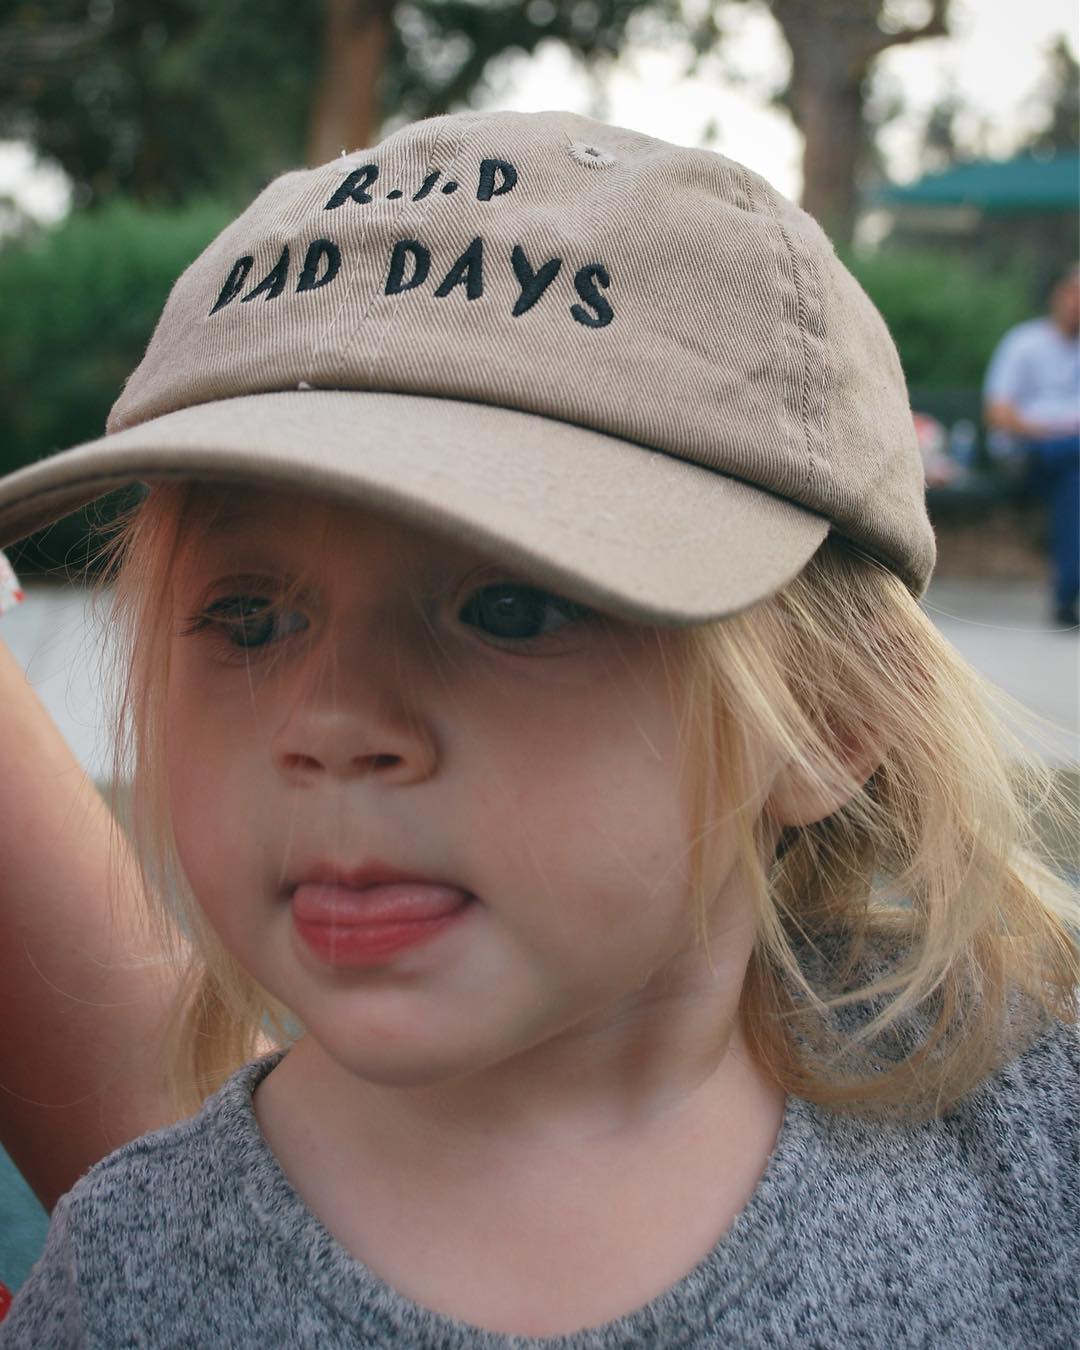 'R.I.P Bad Days' Kids Hats